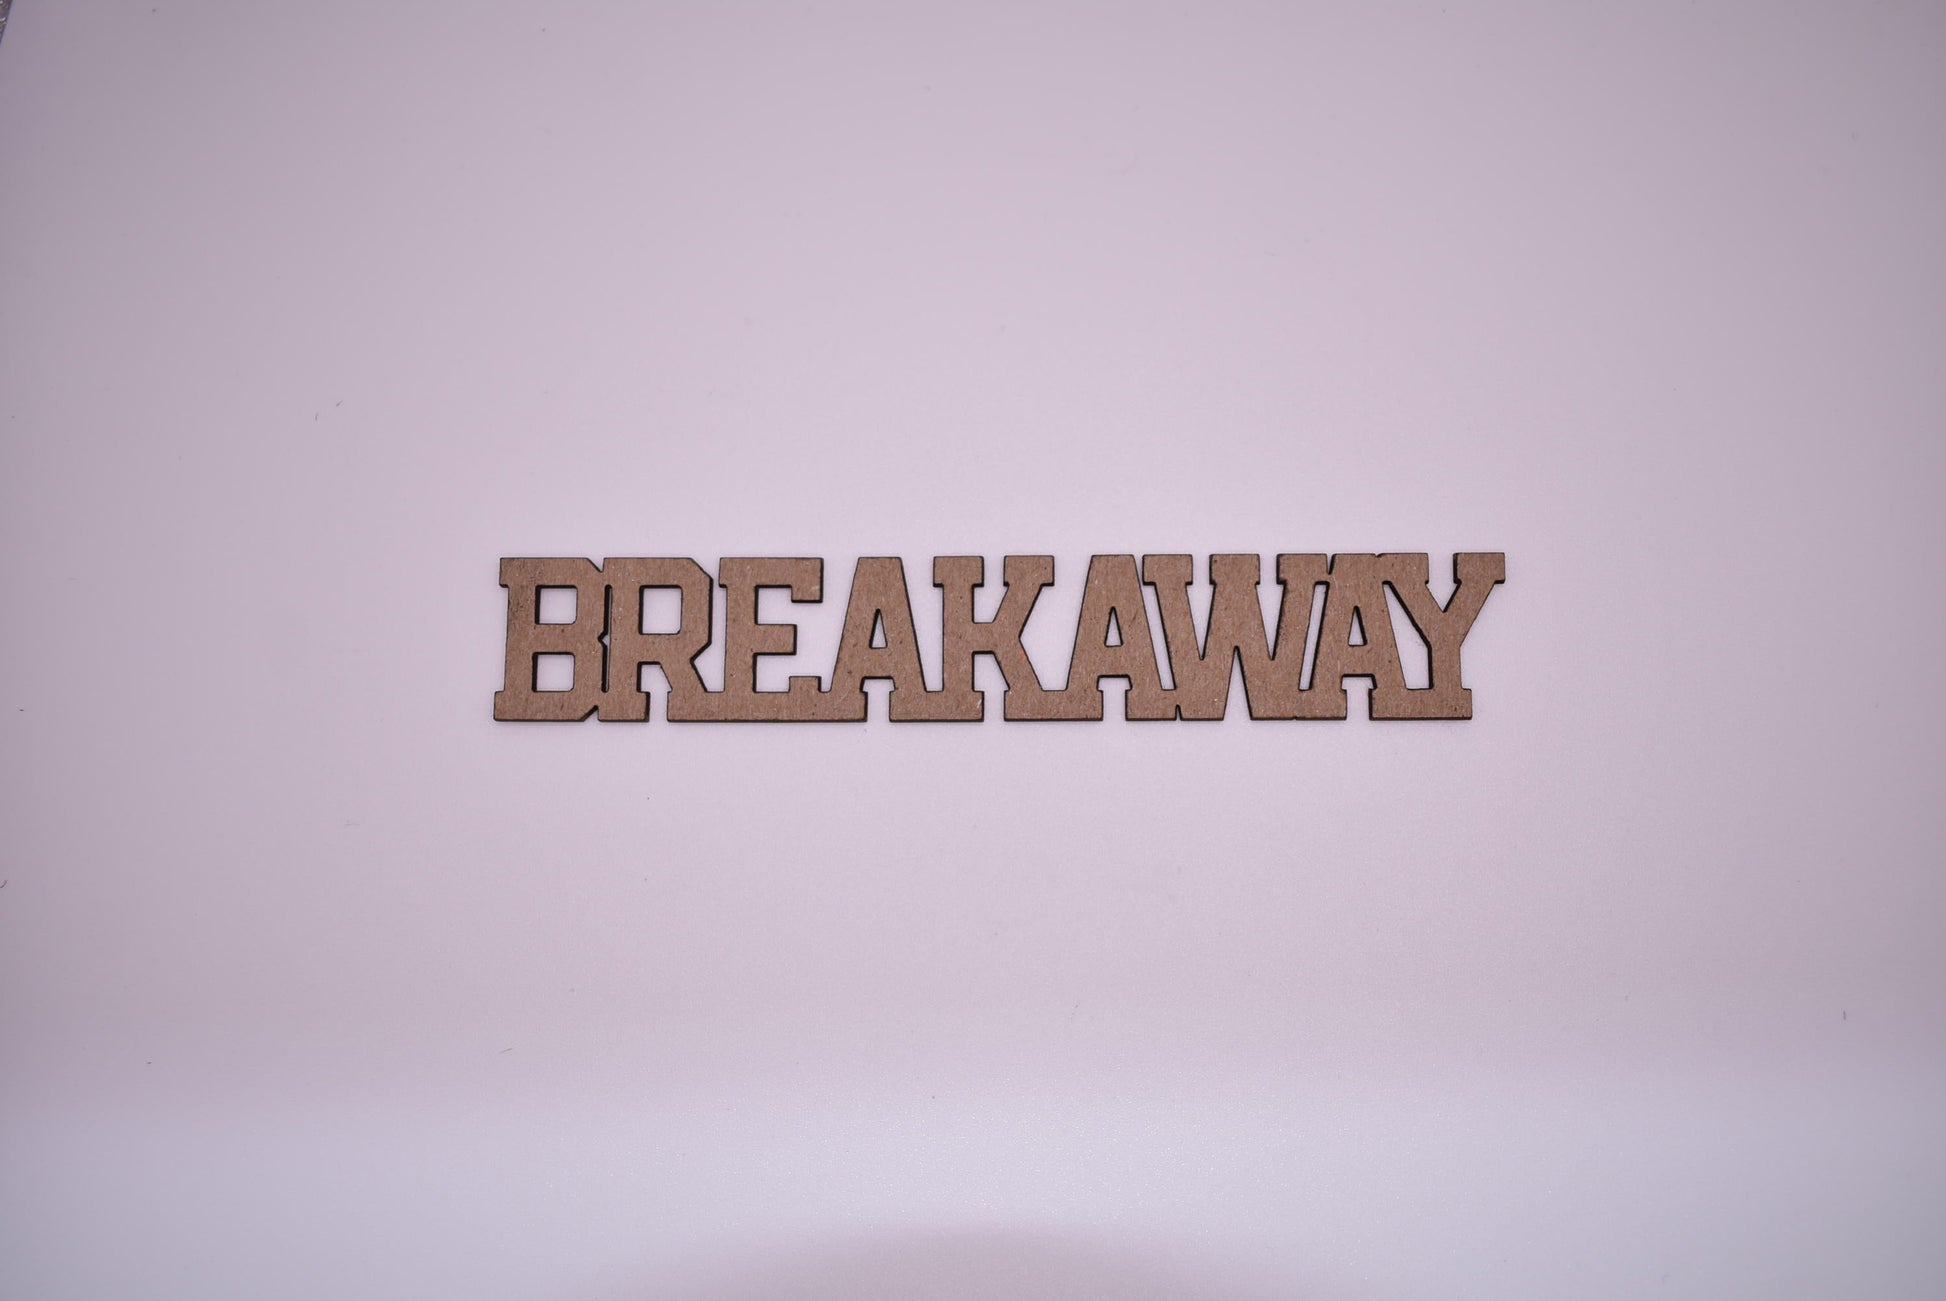 Breakaway - Creative Designs By Kari